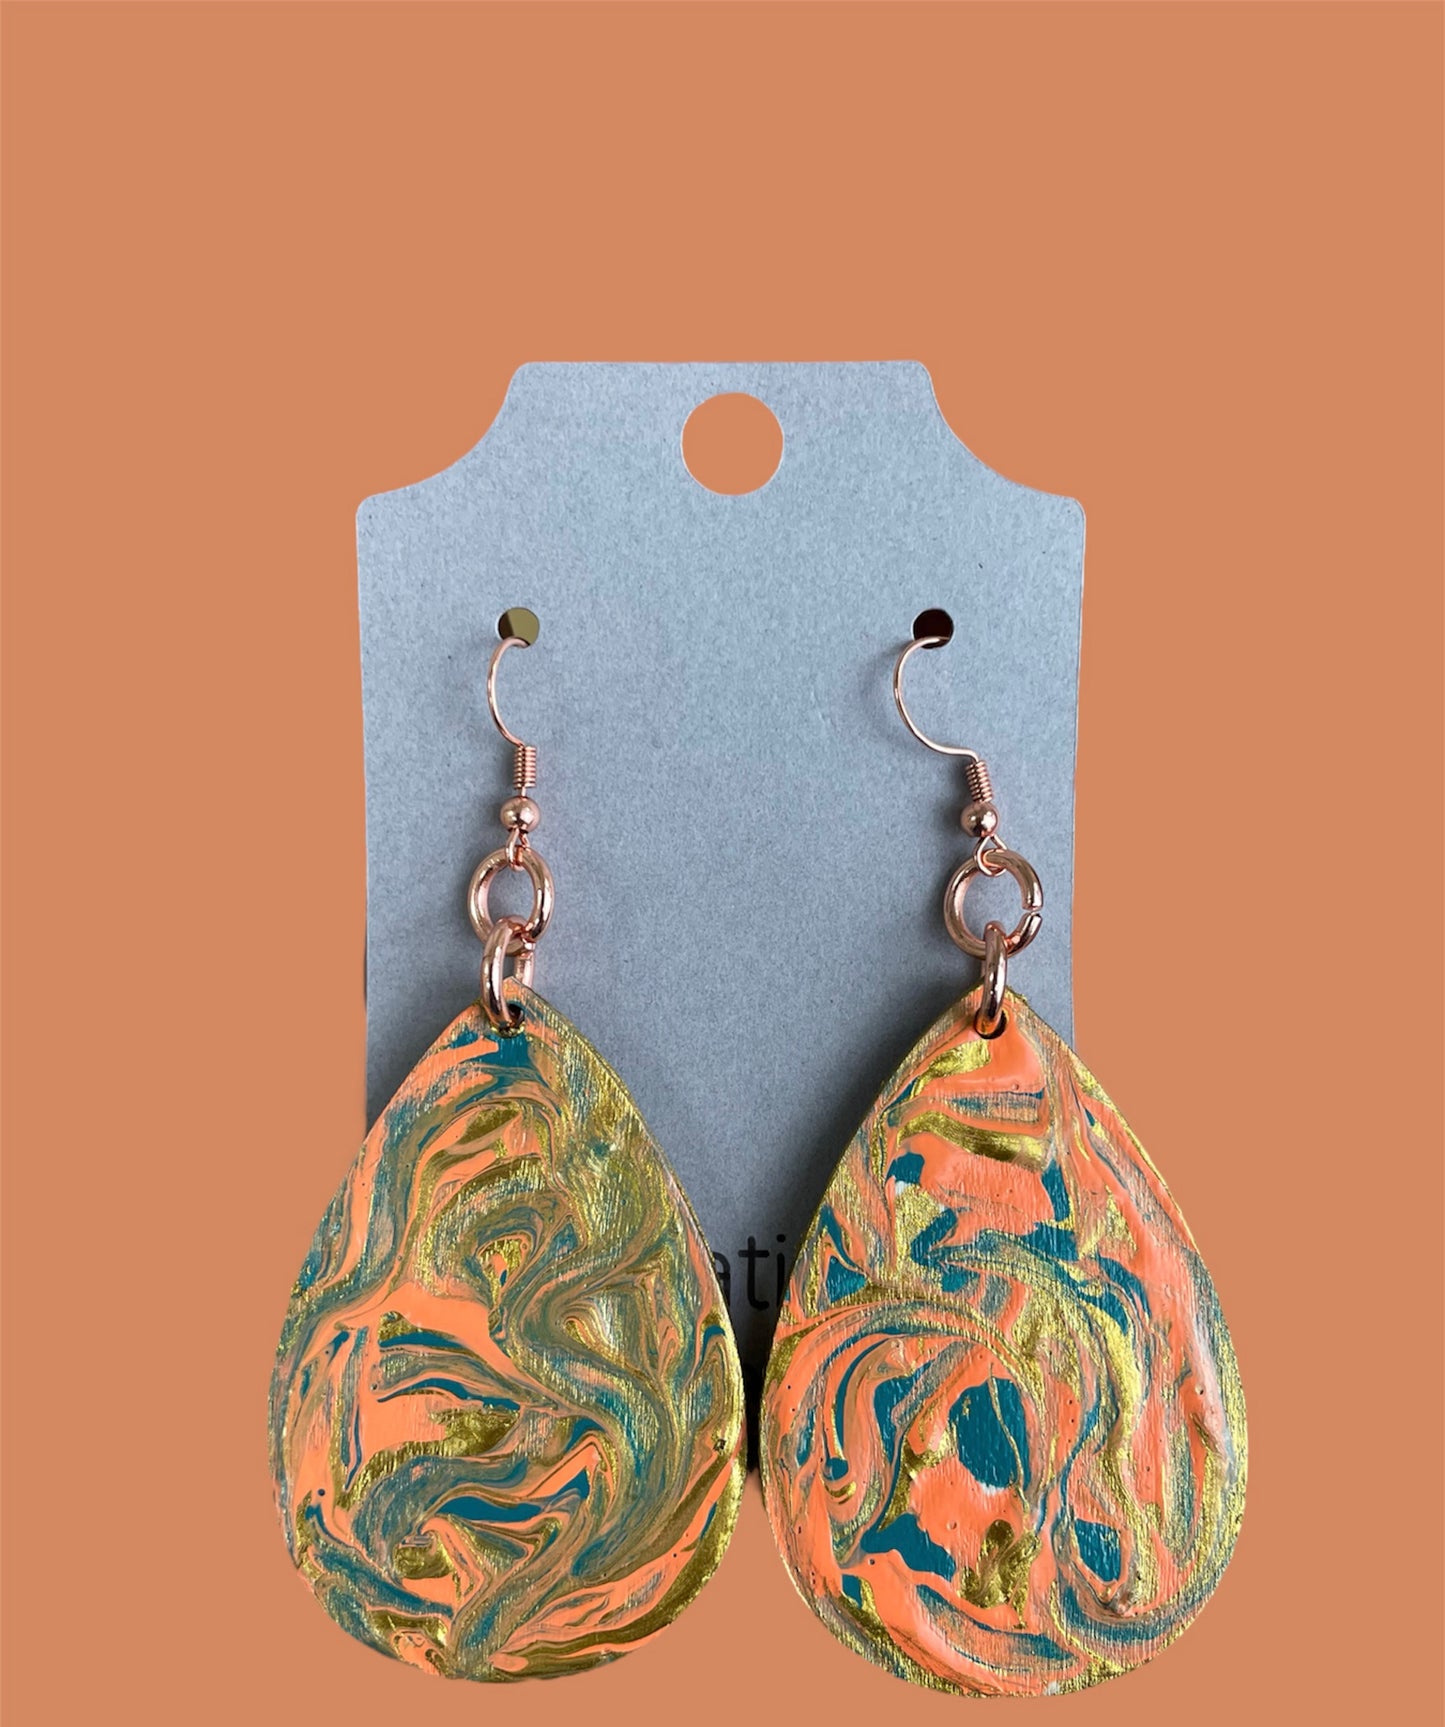 # 238-pink blue gold painted teardrop earrings